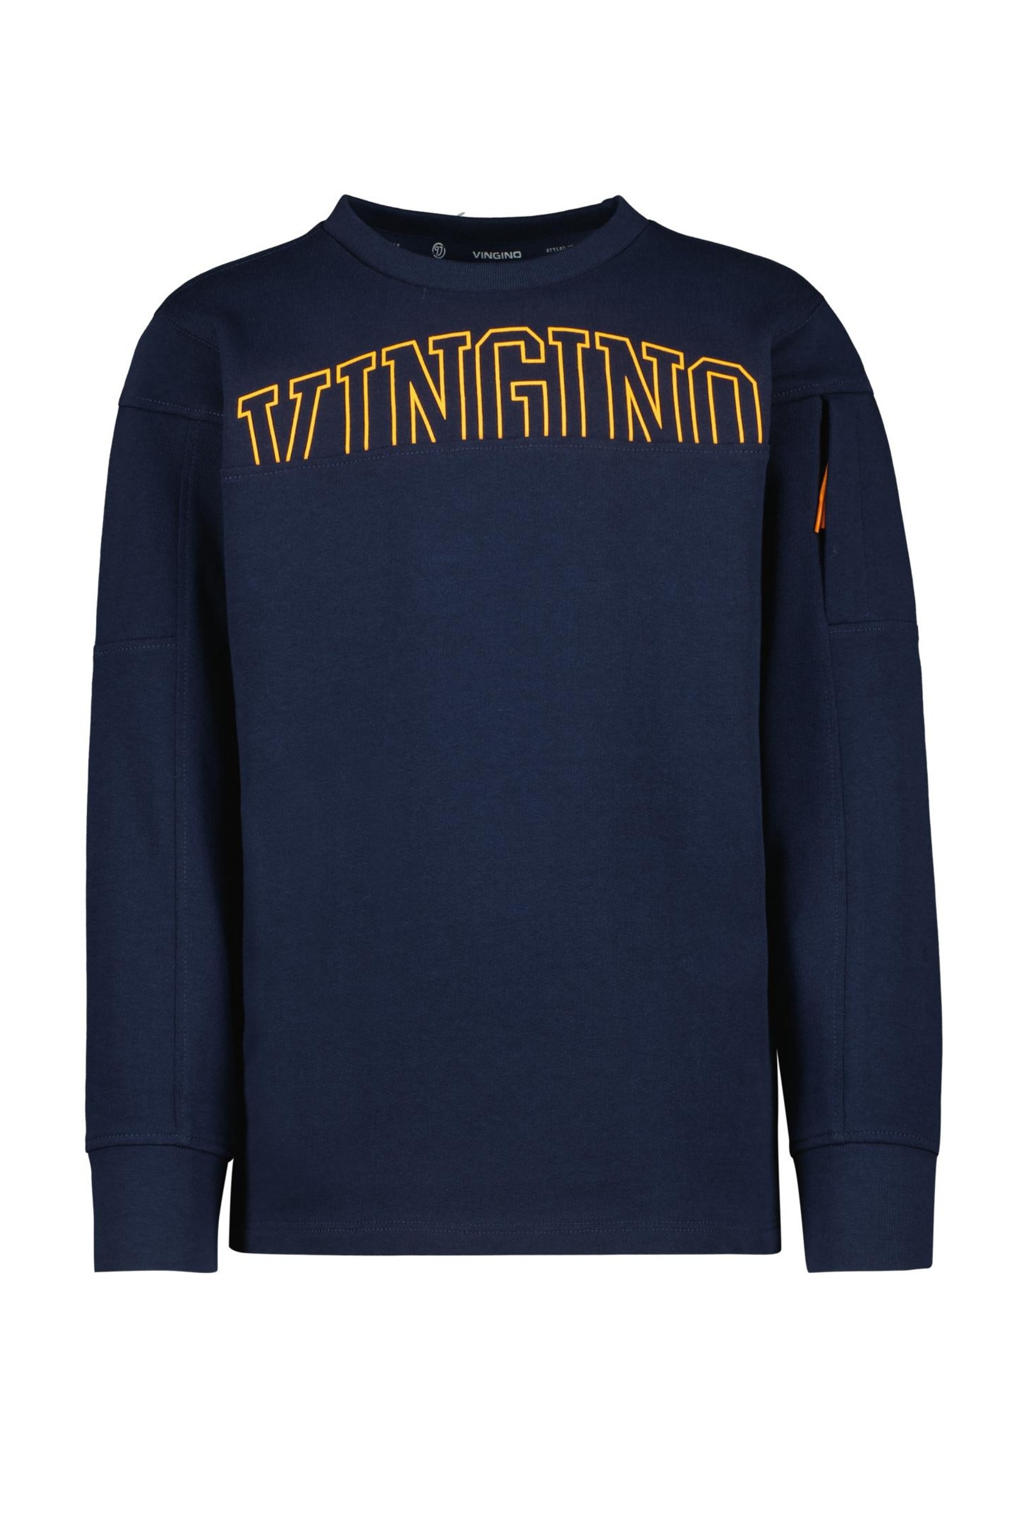 Vingino sweater met printopdruk donkerblauw/geel